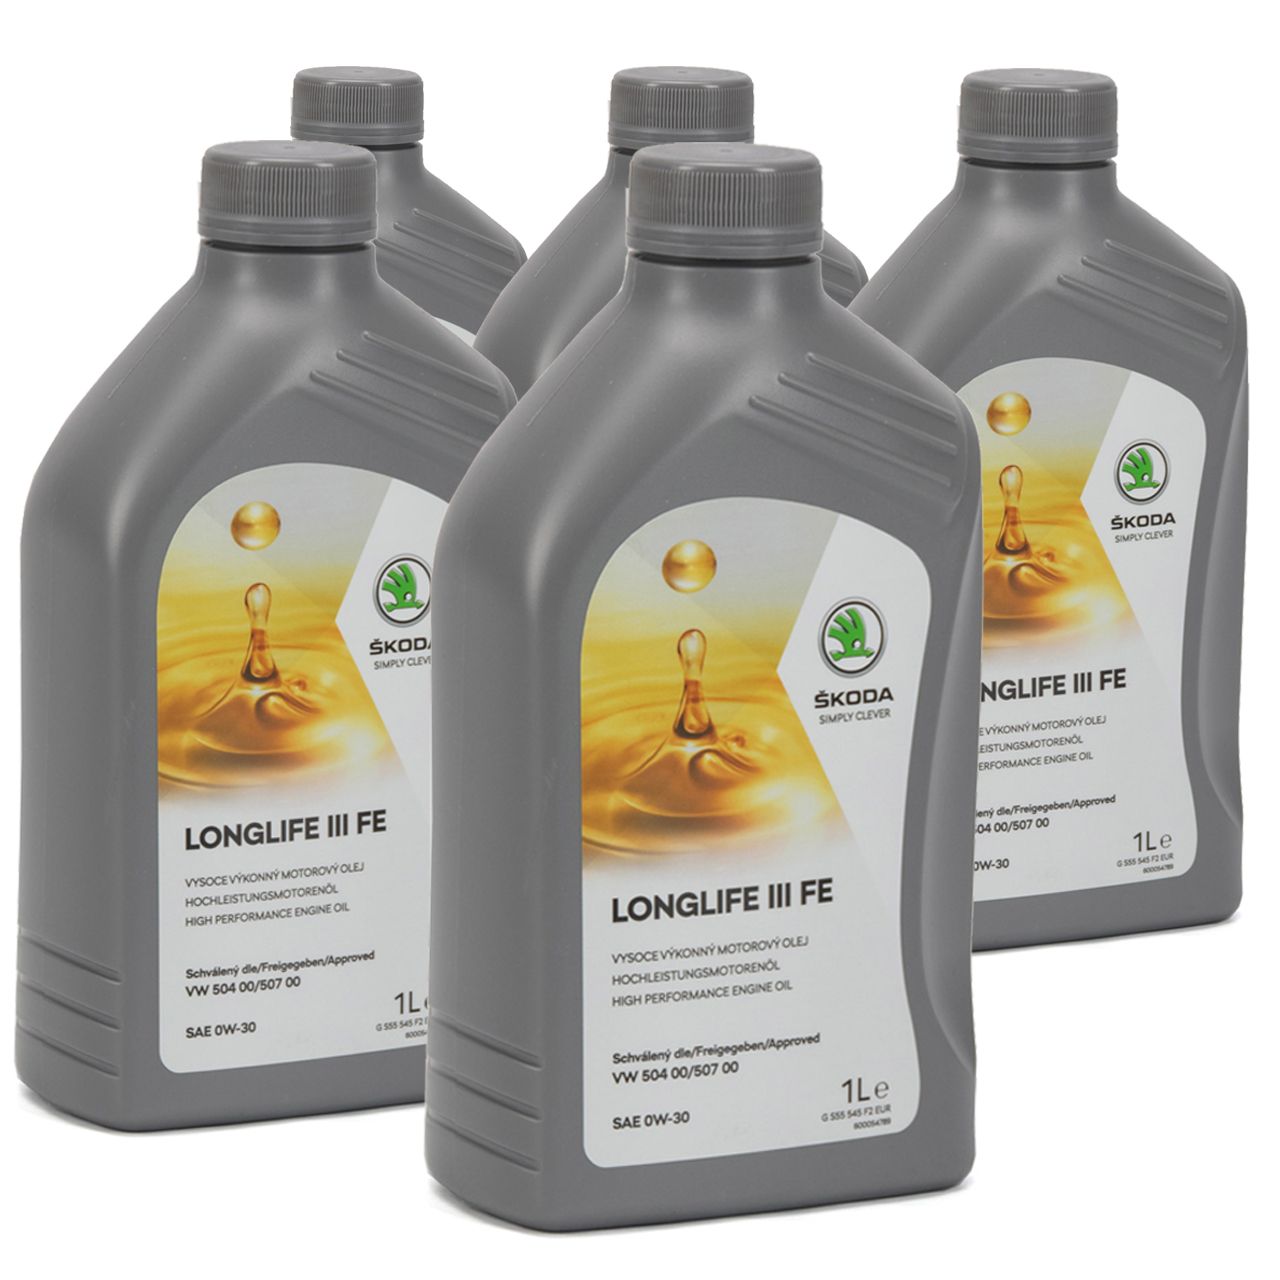 5 Liter ORIGINAL SKODA Motoröl Öl 0W30 LONGLIFE III FE 504.00 507.00 GS55545F2